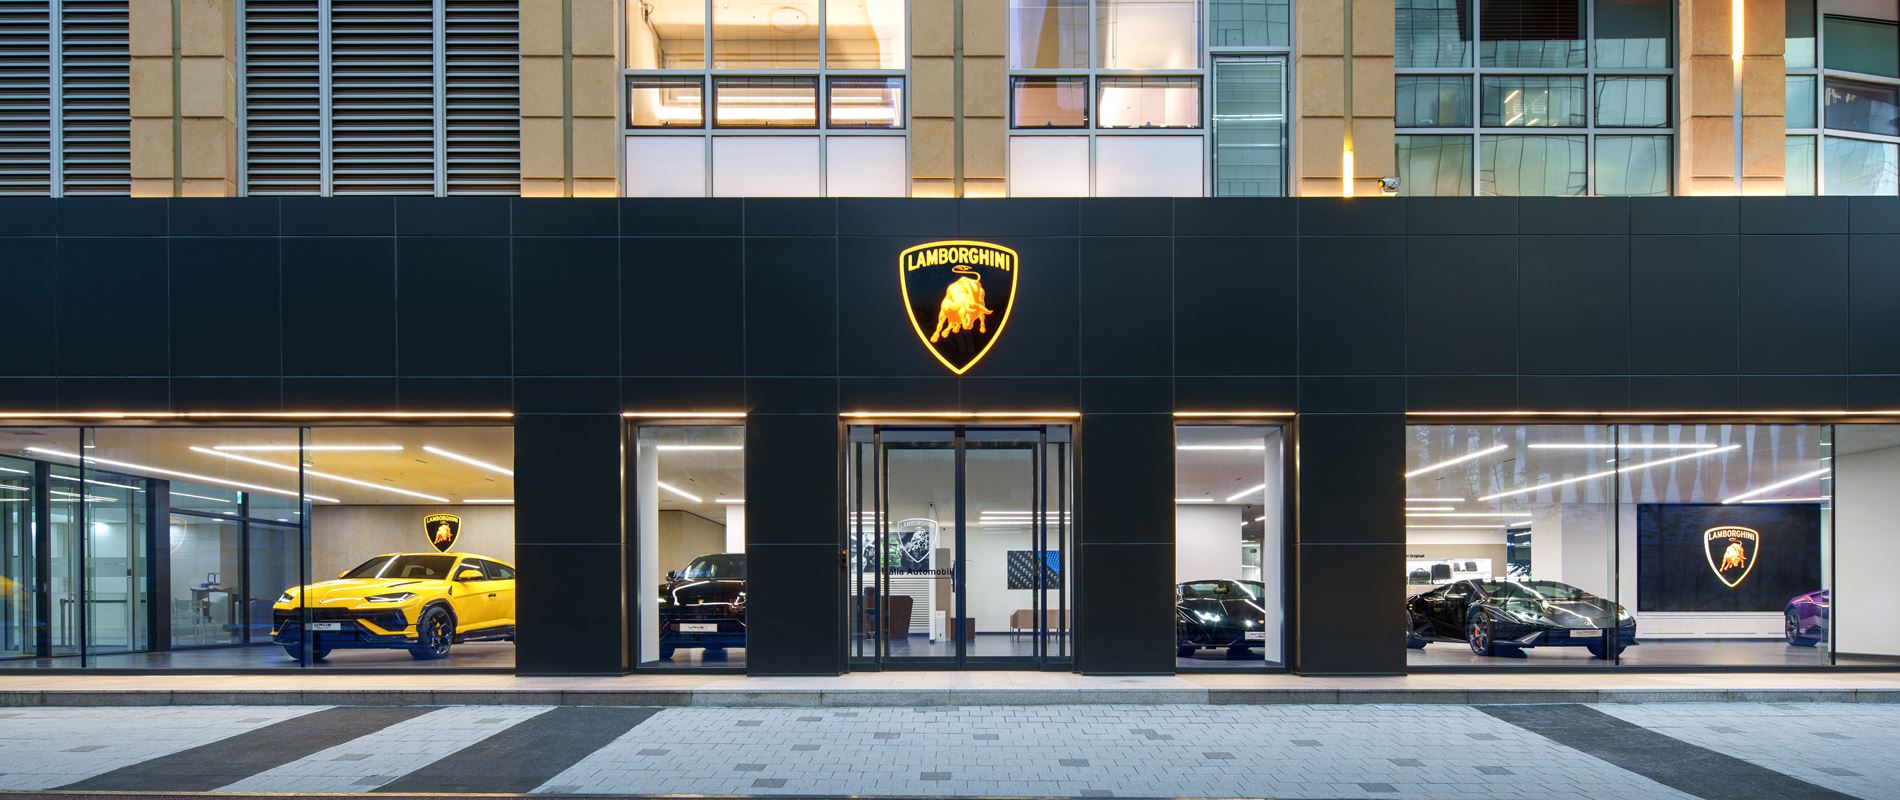 Grand opening of Lamborghini dealership in Bundang South Korea